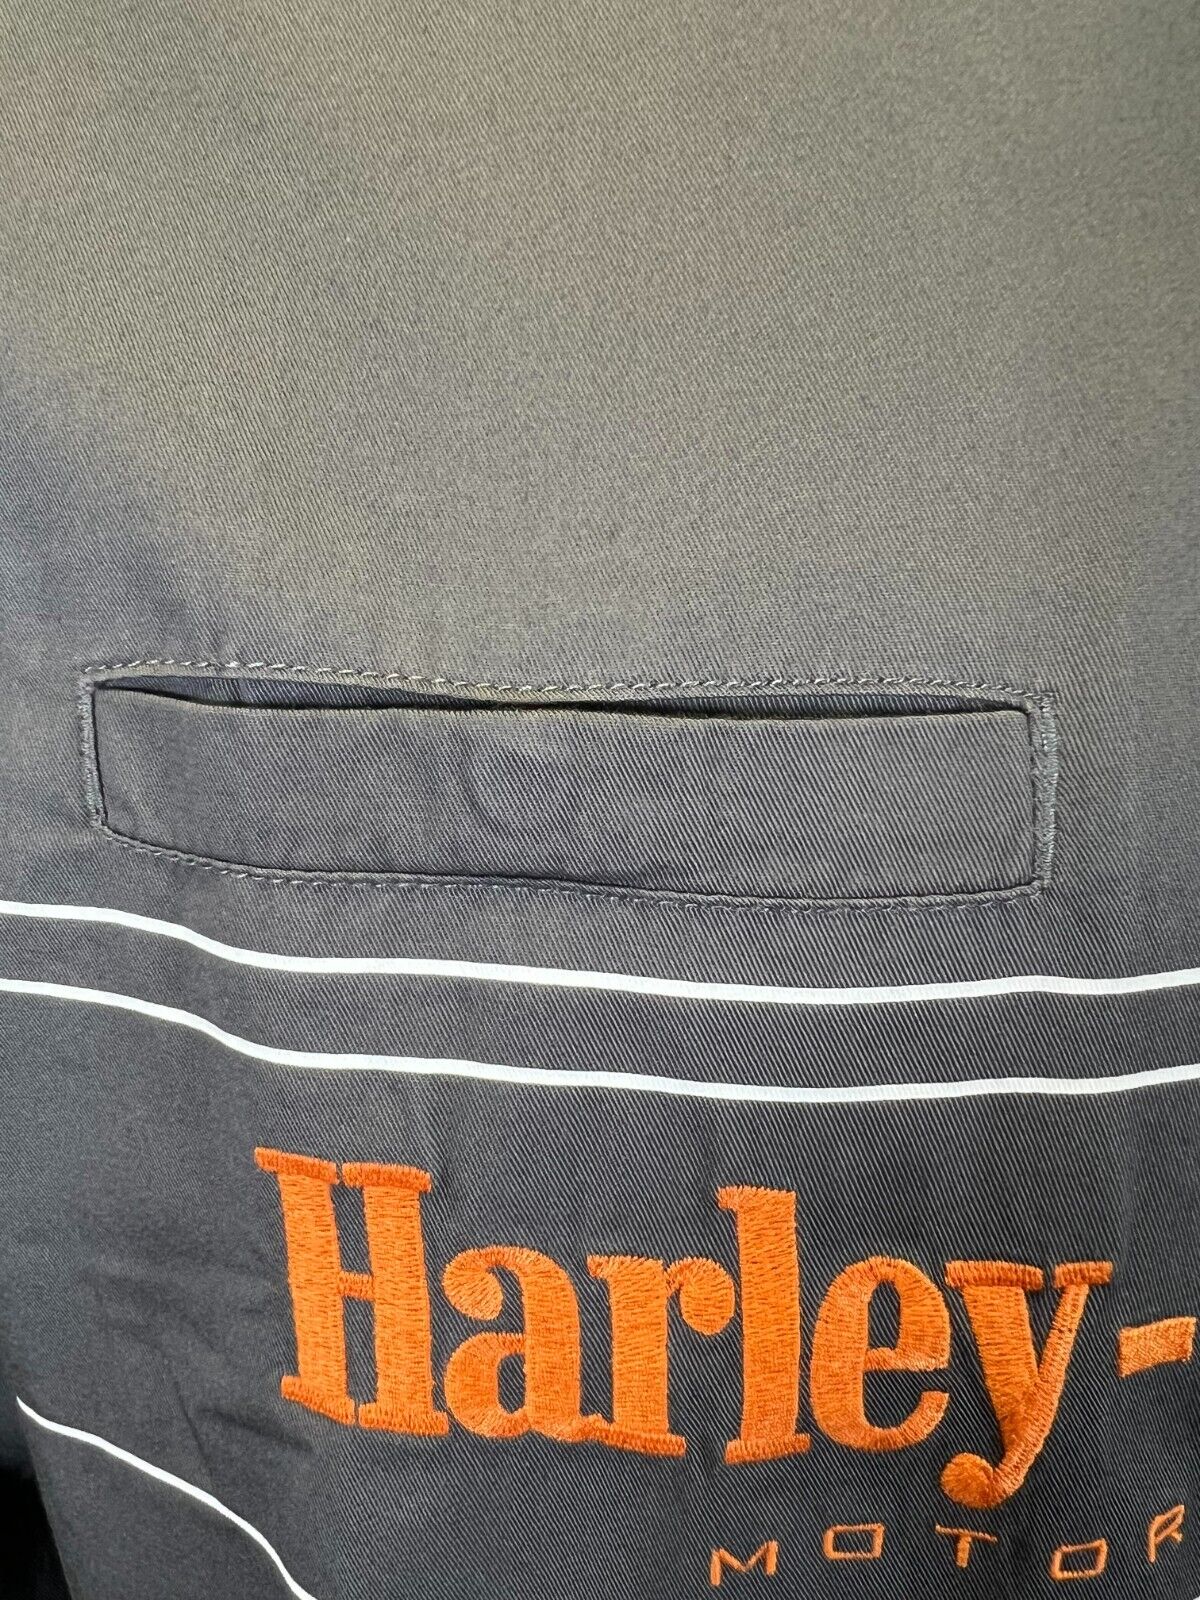 Harley-Davidson Men's Shirt Grey #1 Racing Logo Long Sleeve (S68)